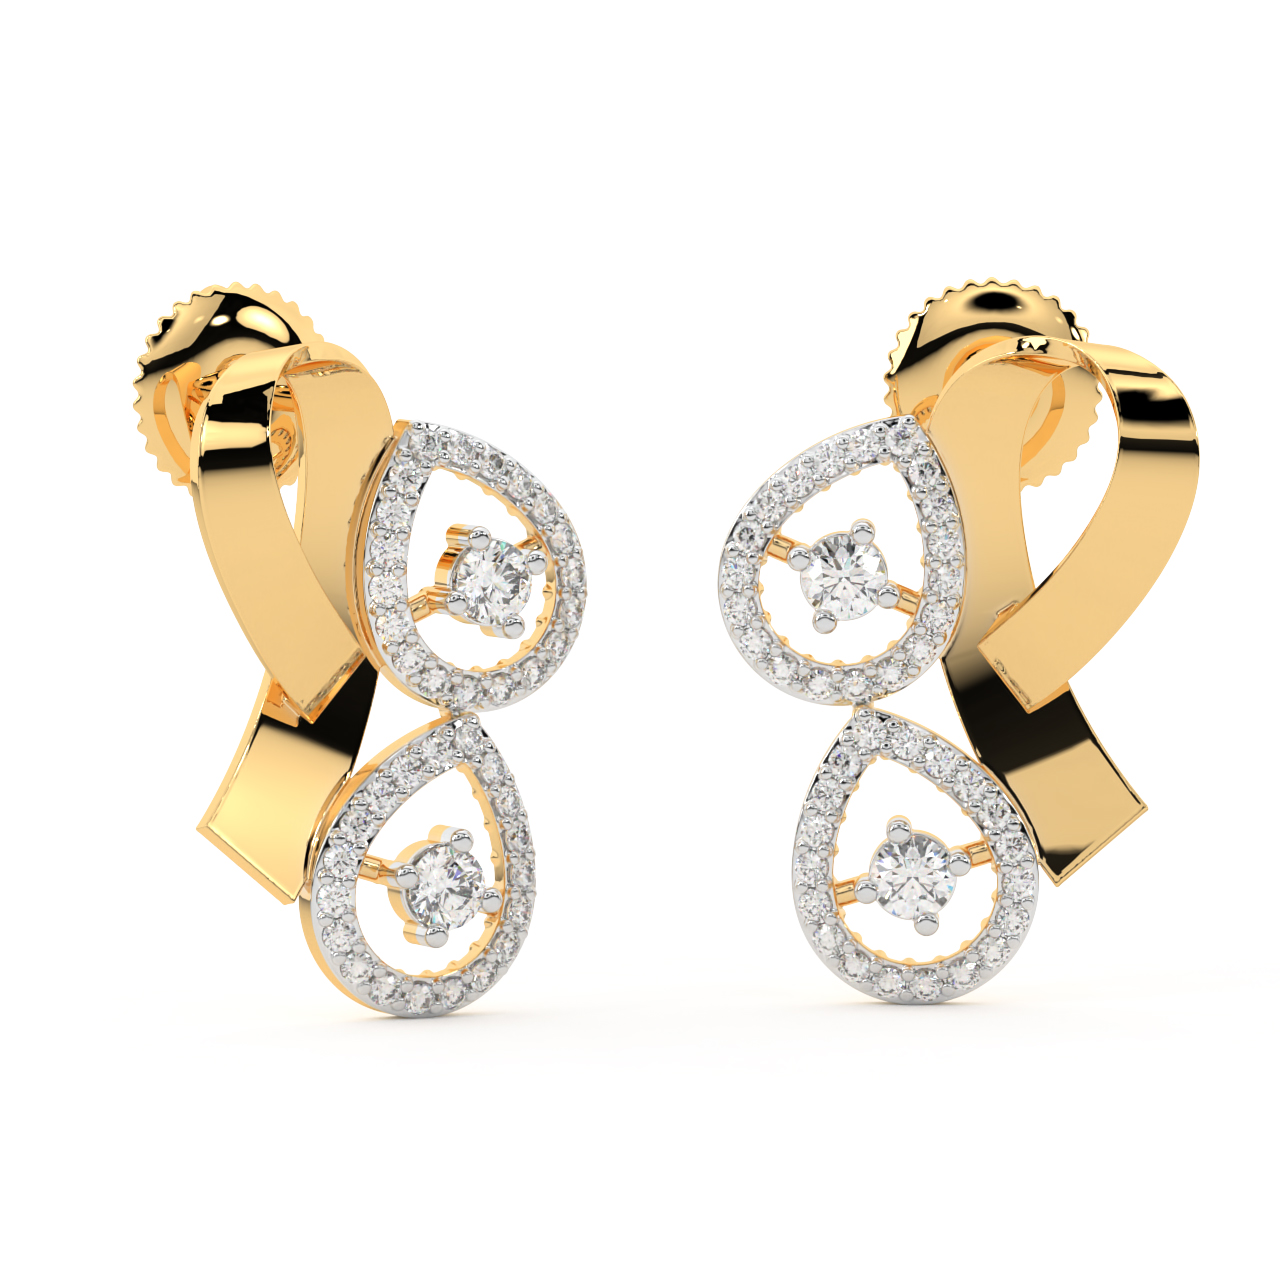 The Chic O Mania Diamond Earrings